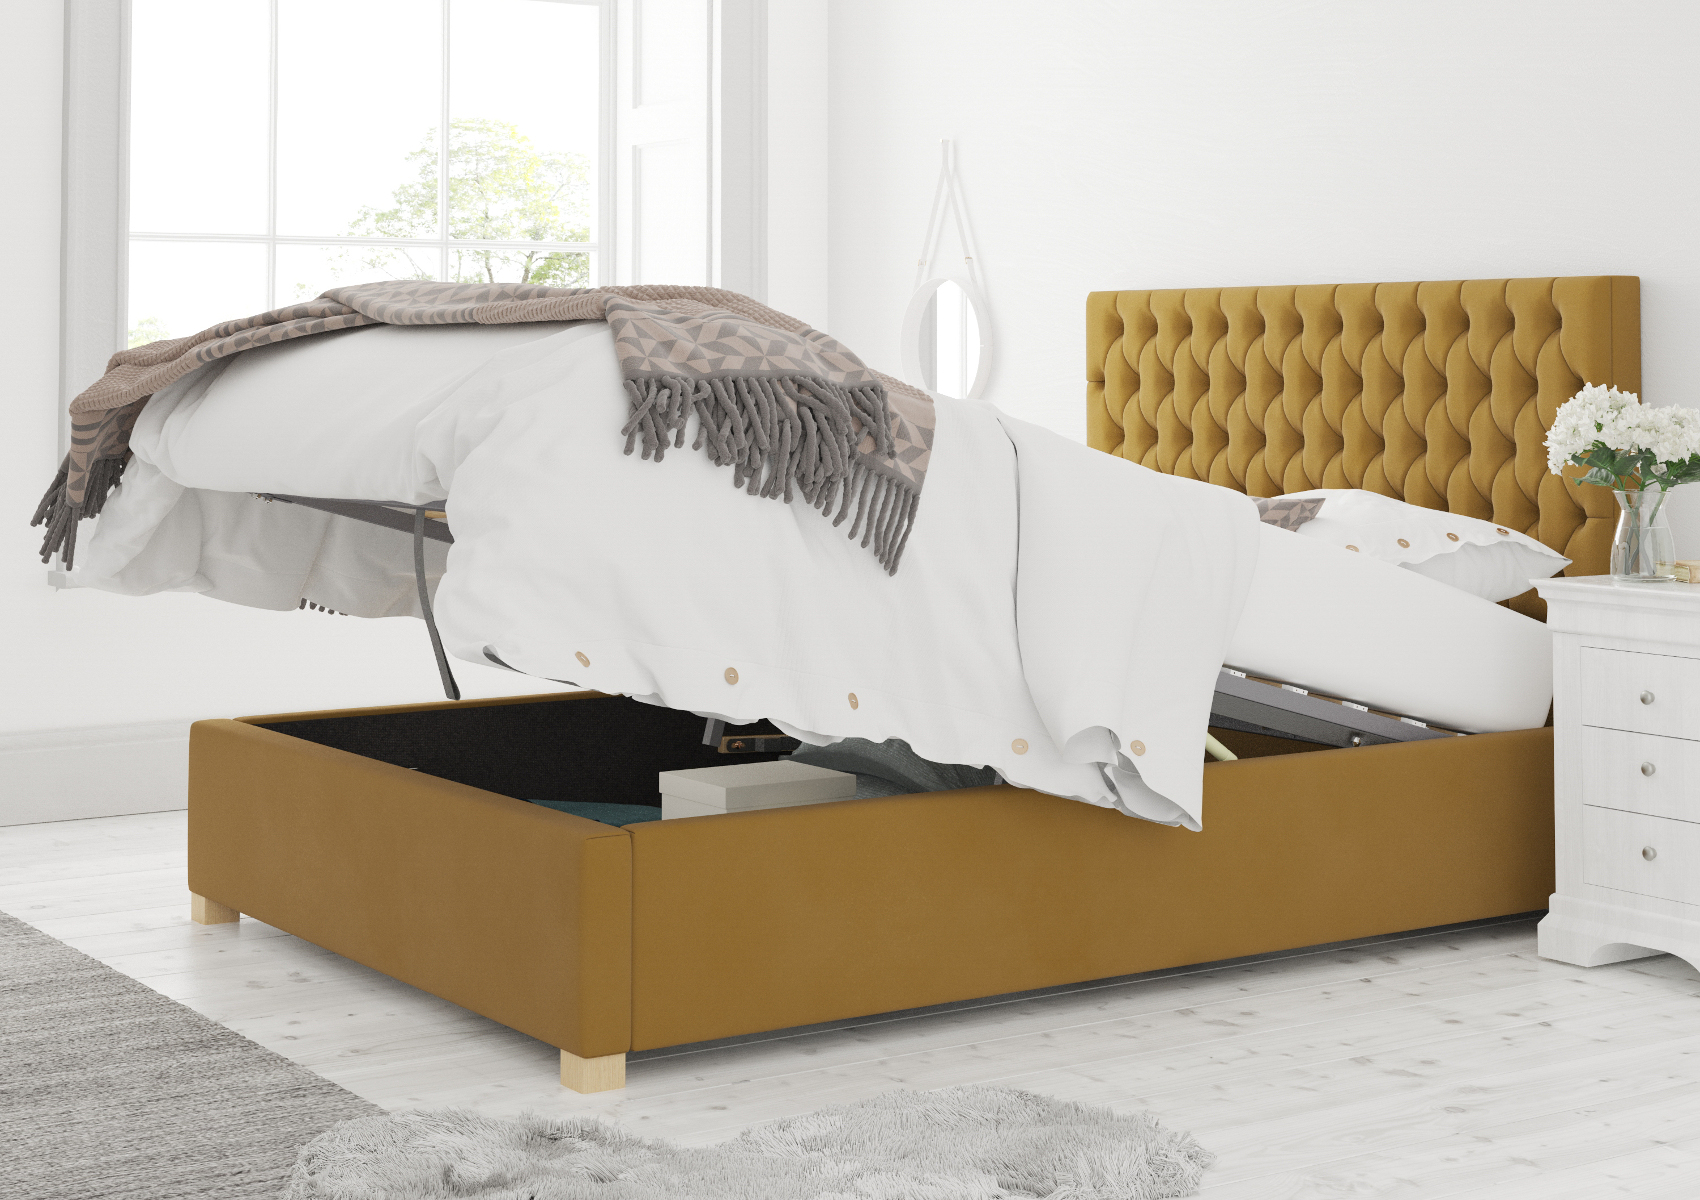 View Malton Ochre Upholstered Single Ottoman Bed Time4Sleep information